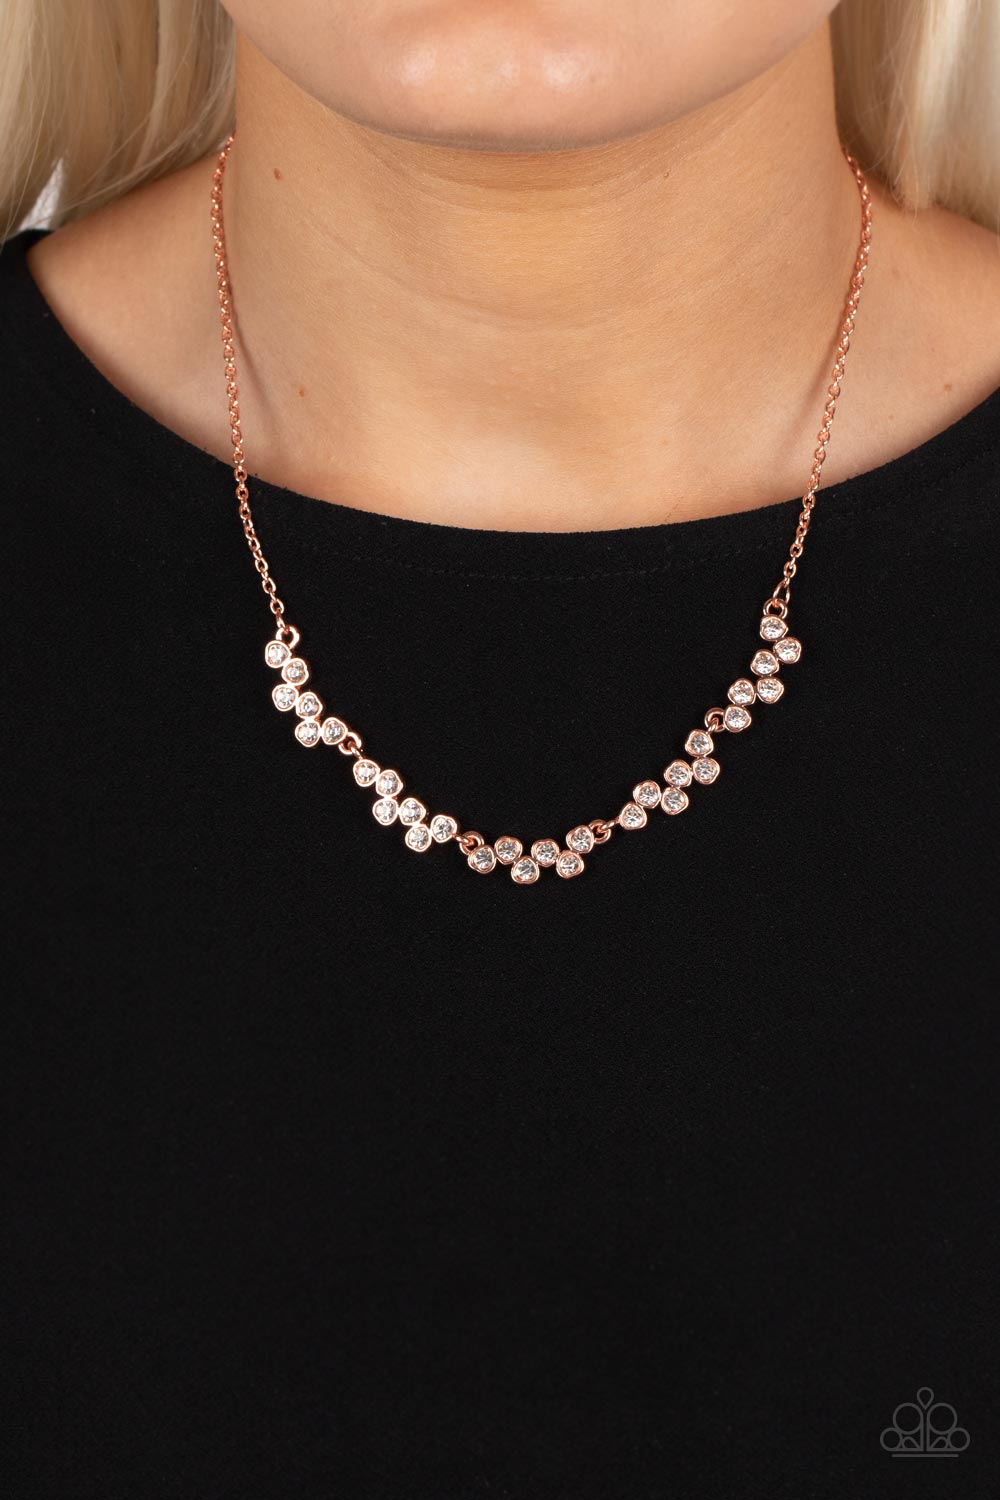 SELFIE-Love - Copper Necklace - Paparazzi Accessories - Alie's Bling Bar